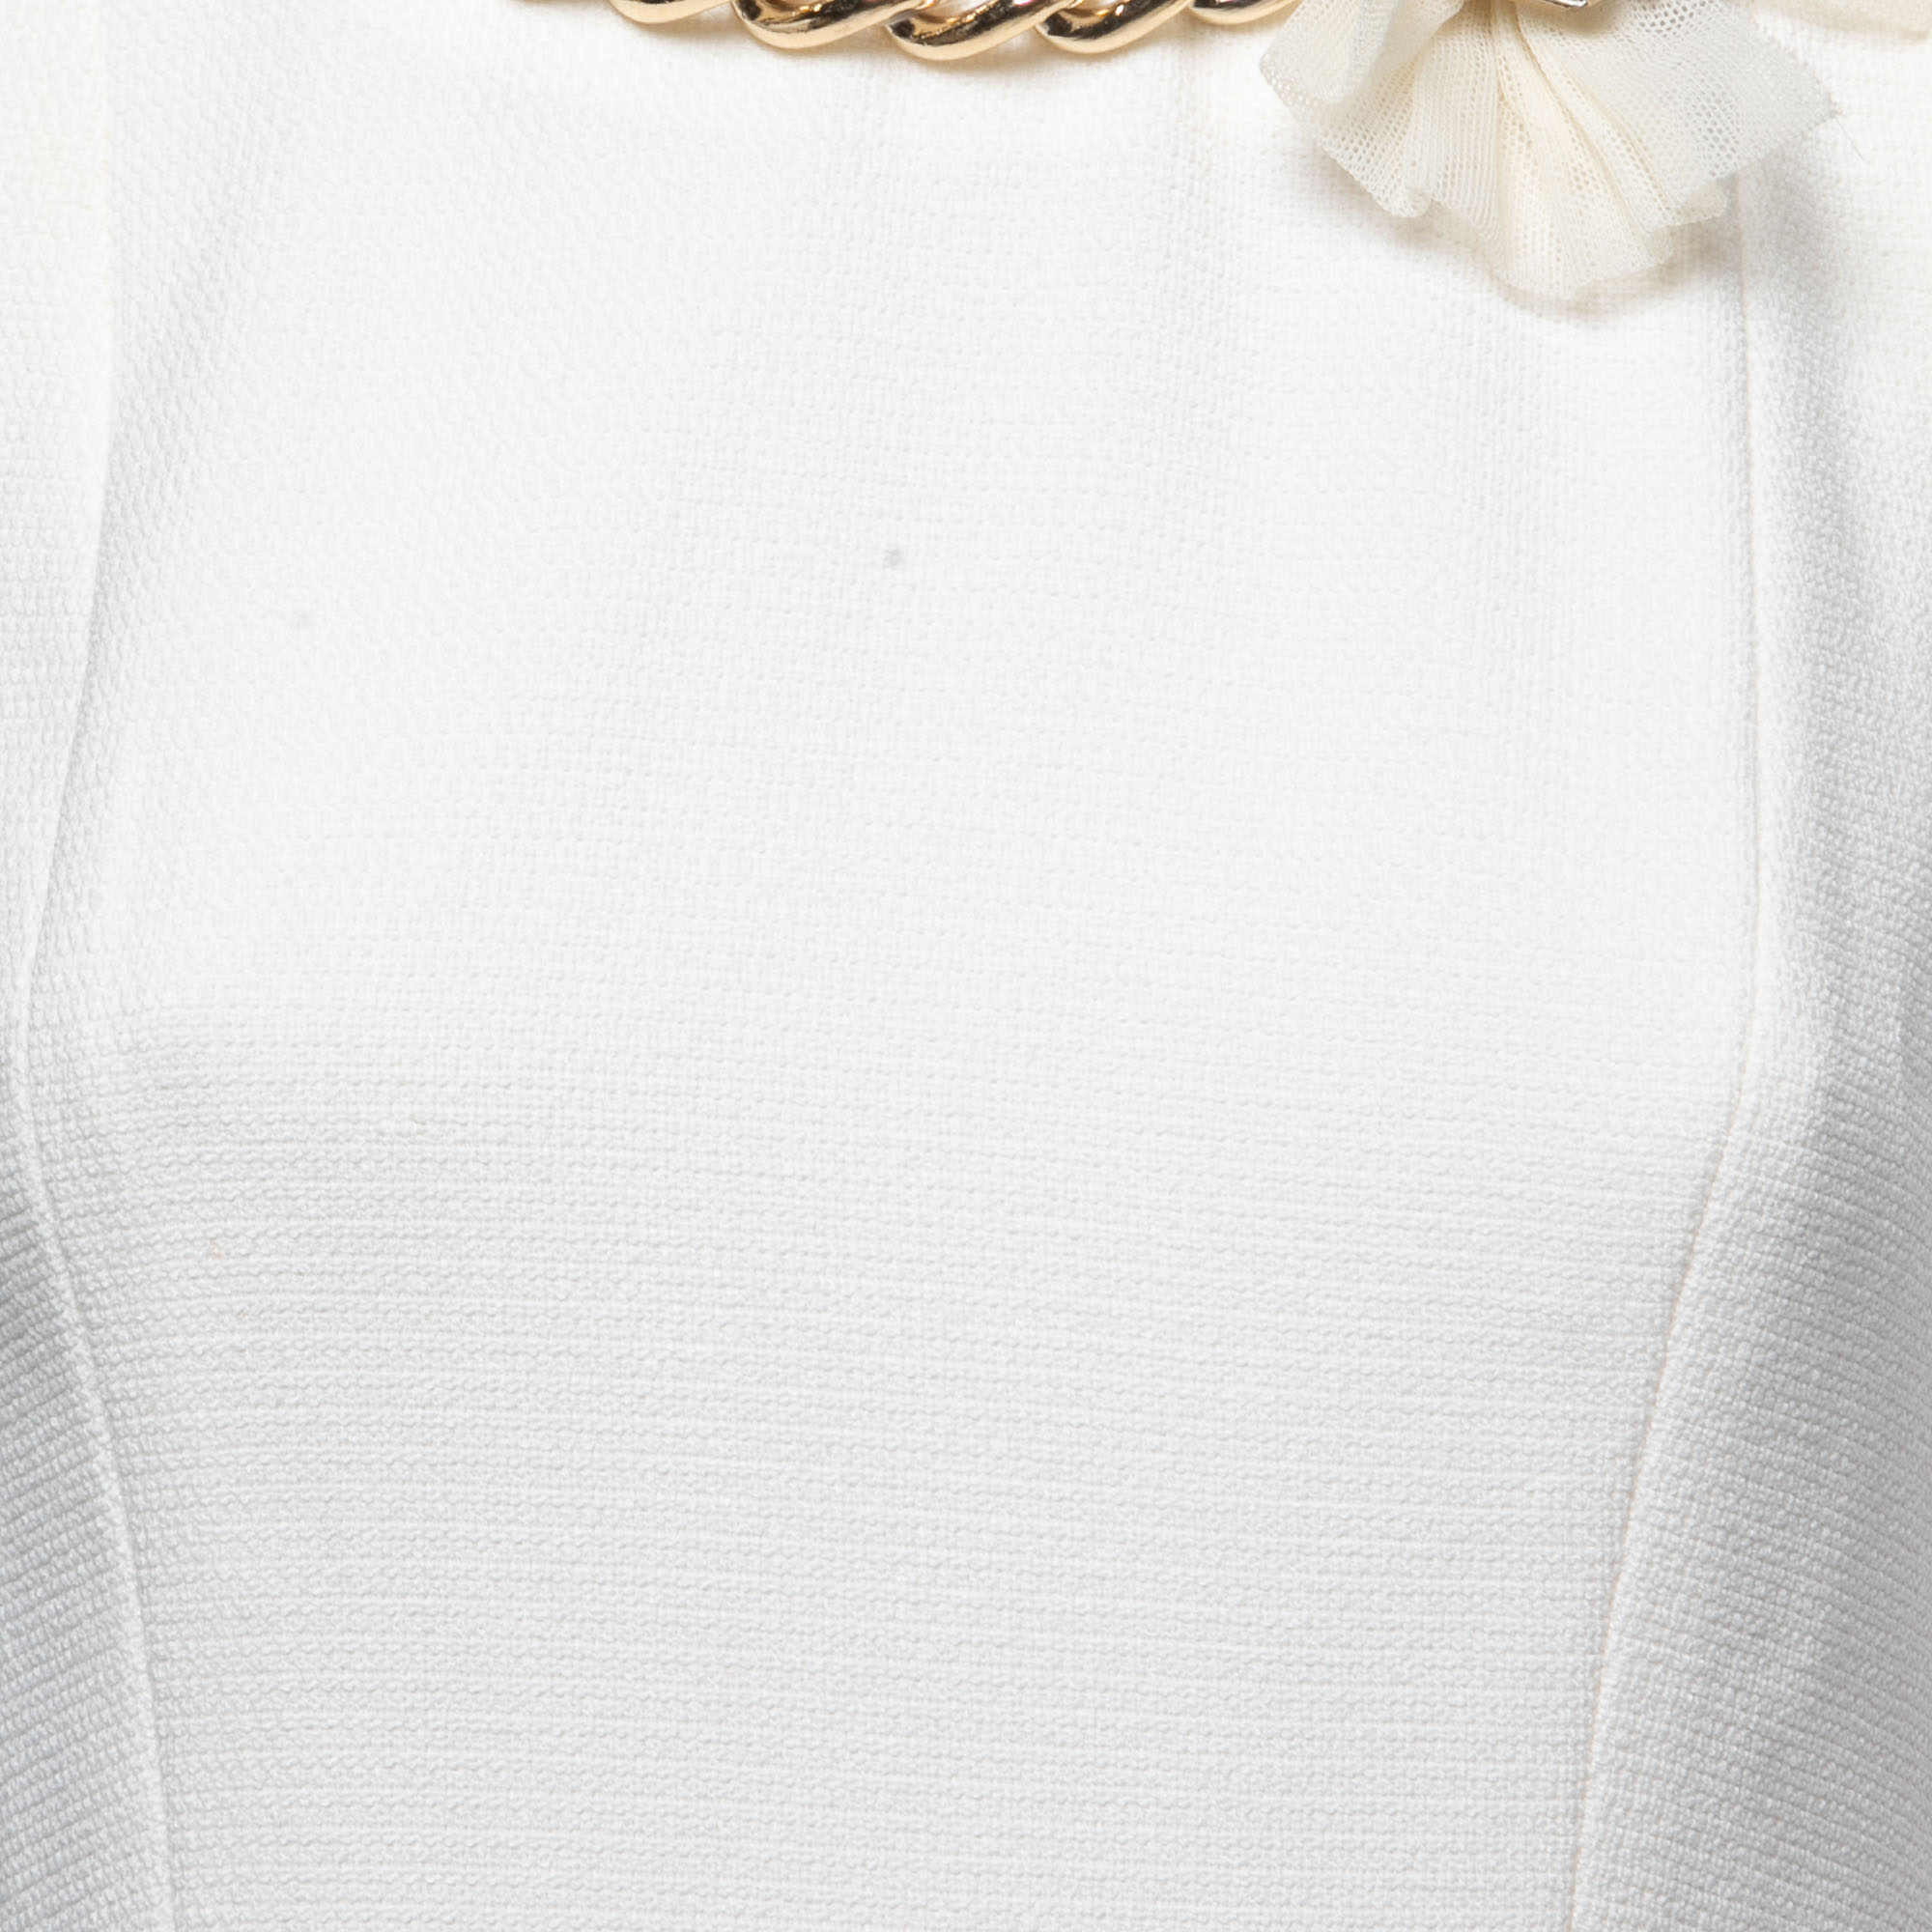 Elisabetta Franchi White Floral Lace Chain Detail Mini Dress XL